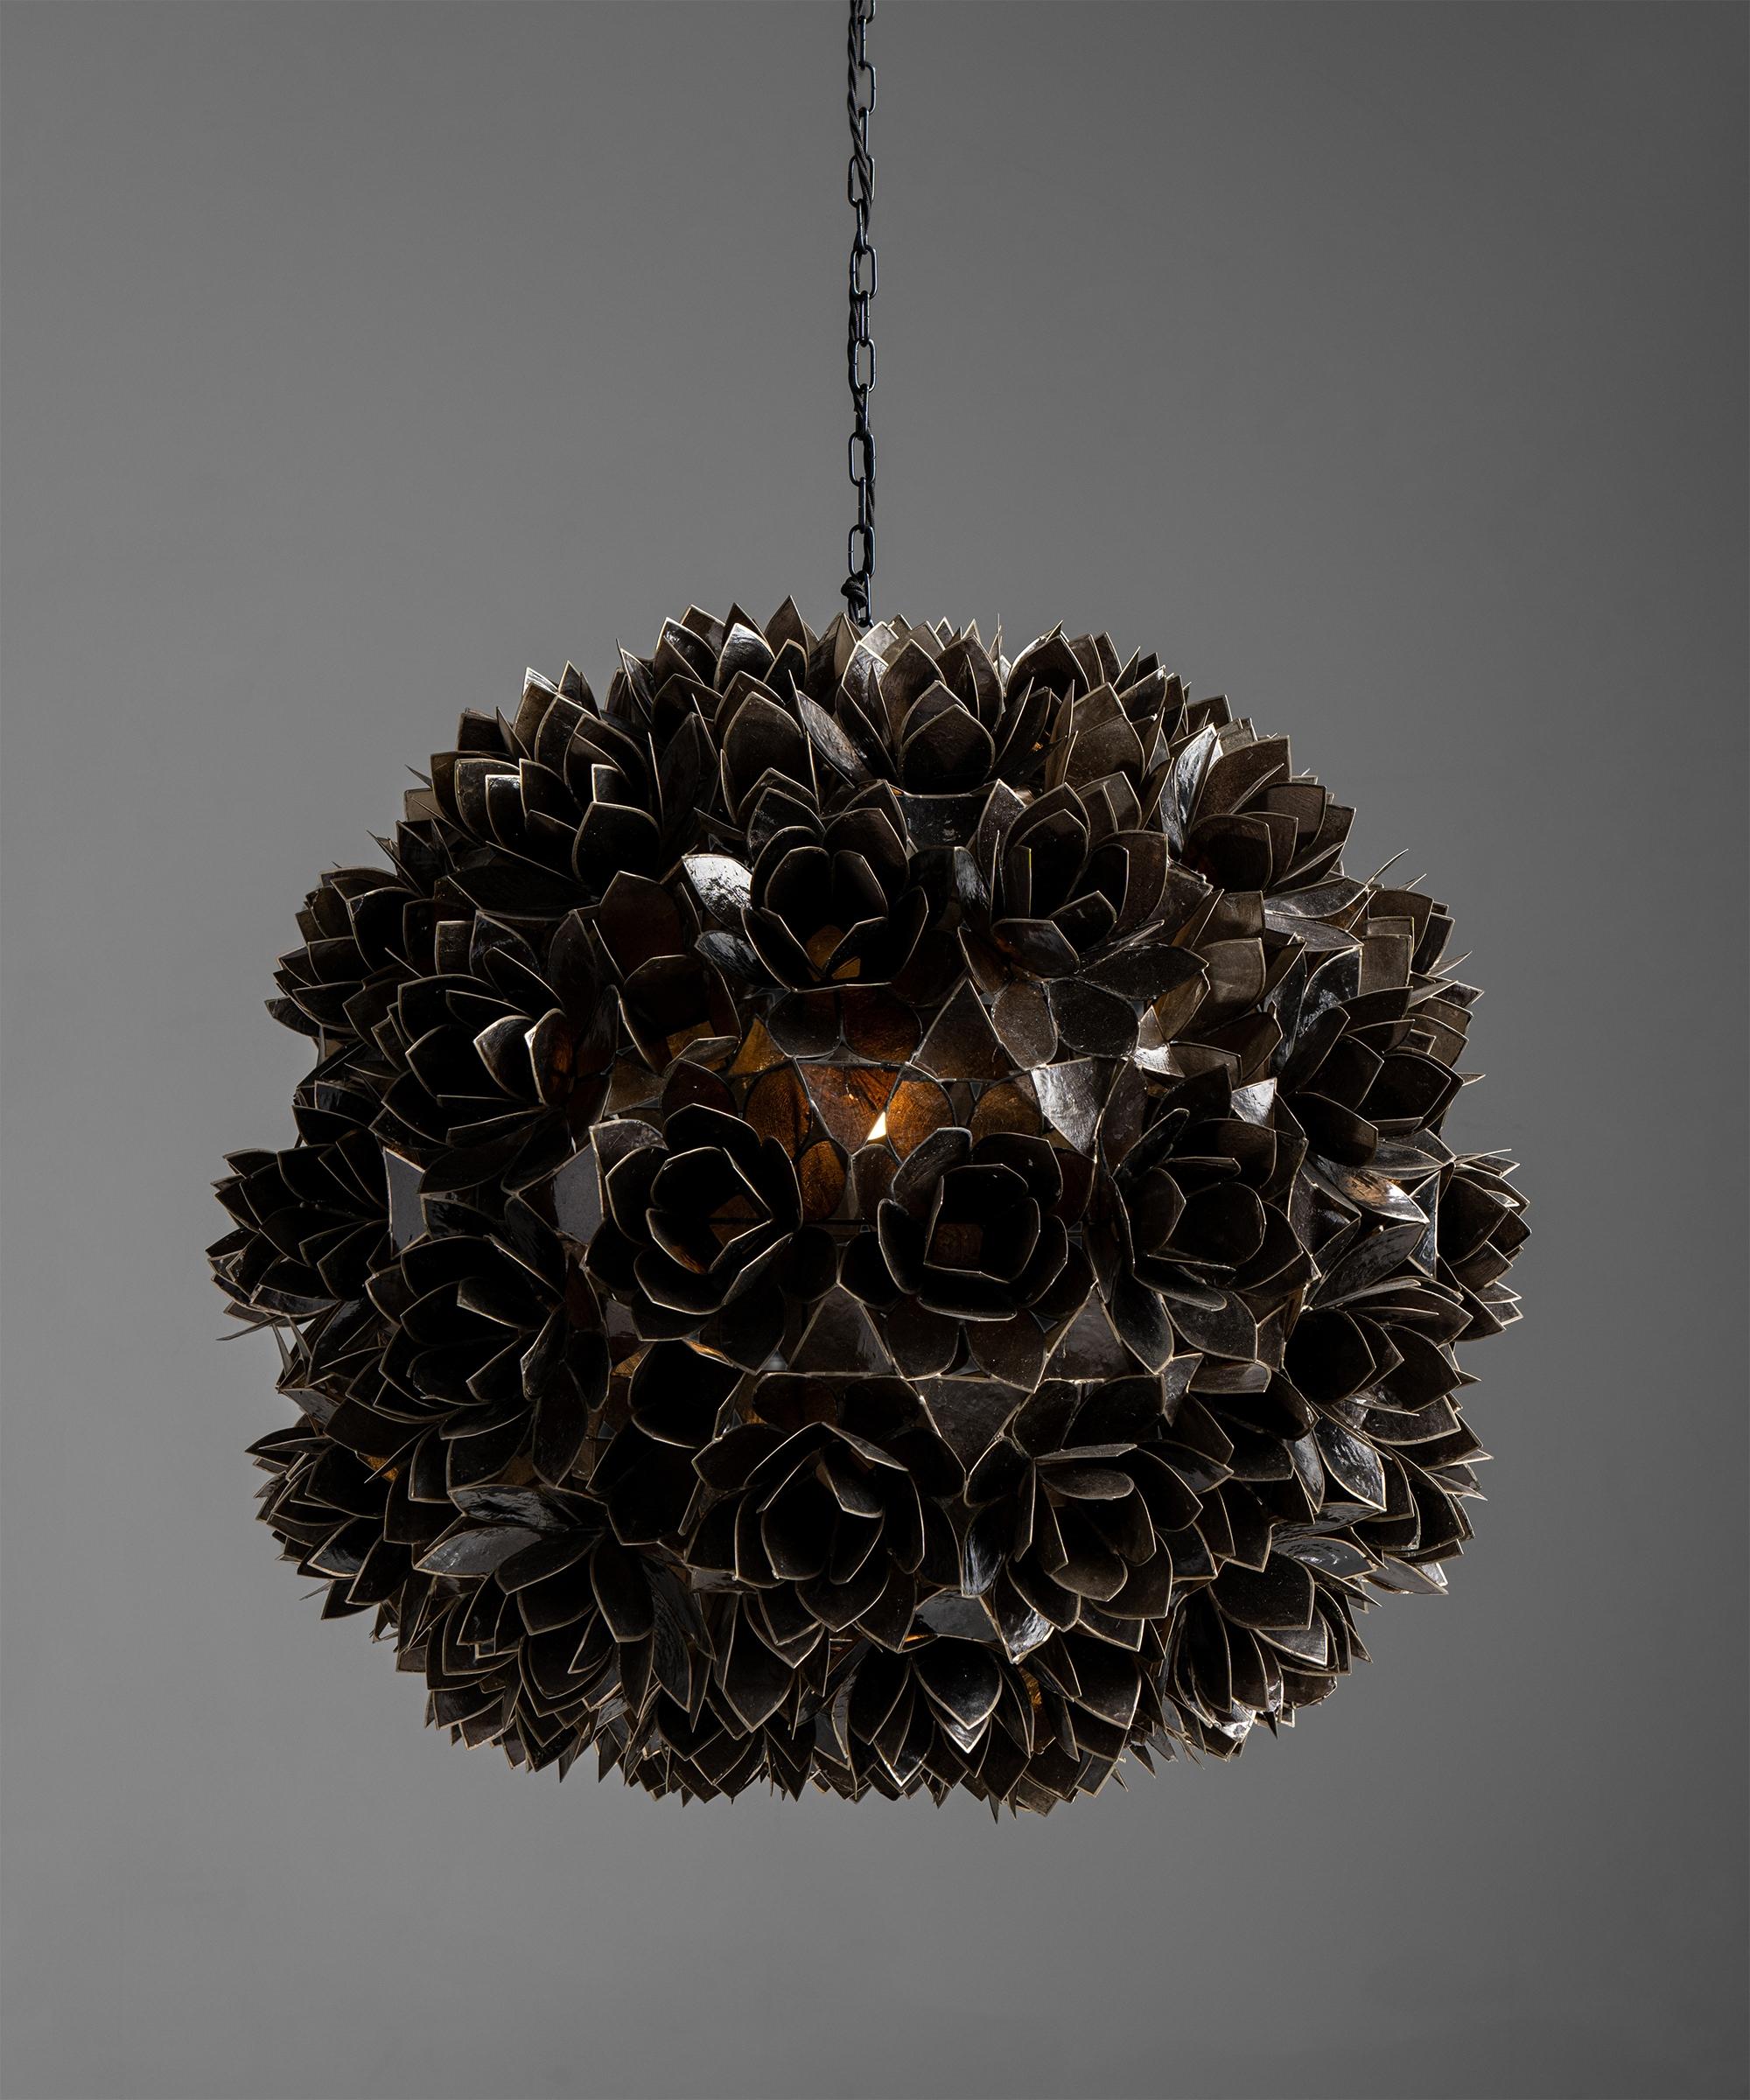 Capiz shell pendant,
France, circa 1960

Black capiz shells with tin armature, forming a series of flowers.

Measures: 24.5” diameter x 27” height

$ 7,200.

 